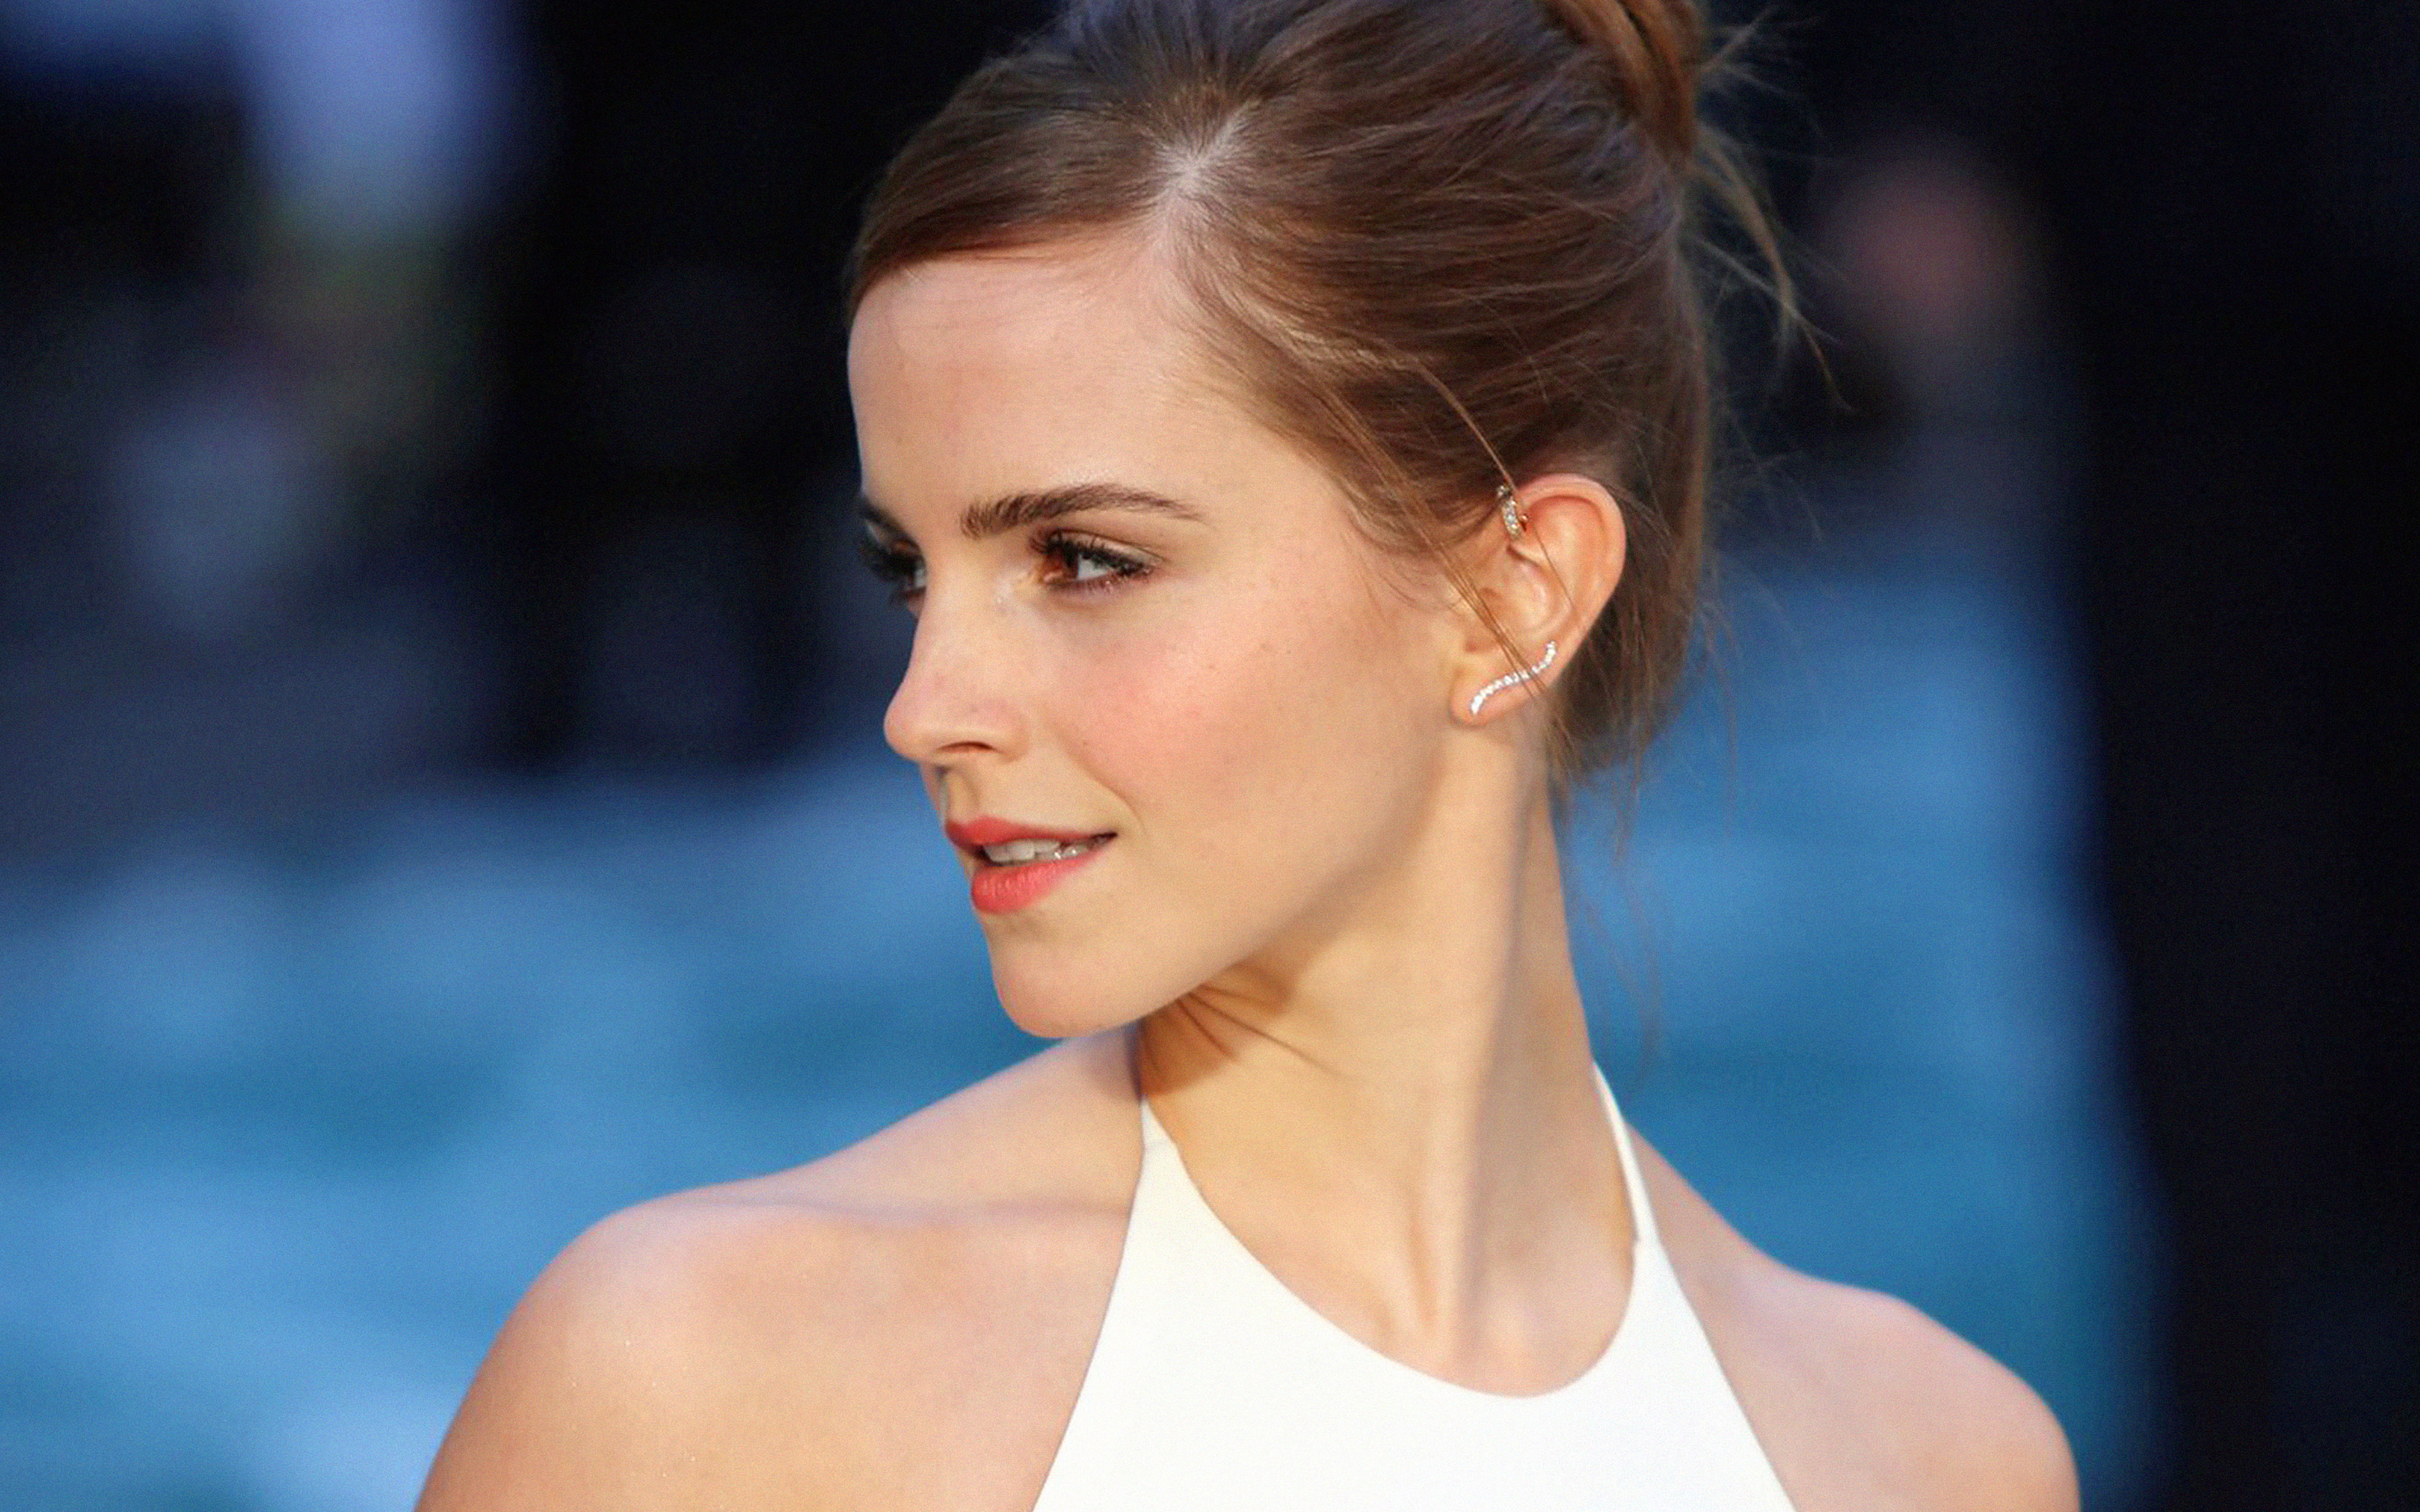 Emma Watson , HD Wallpaper & Backgrounds